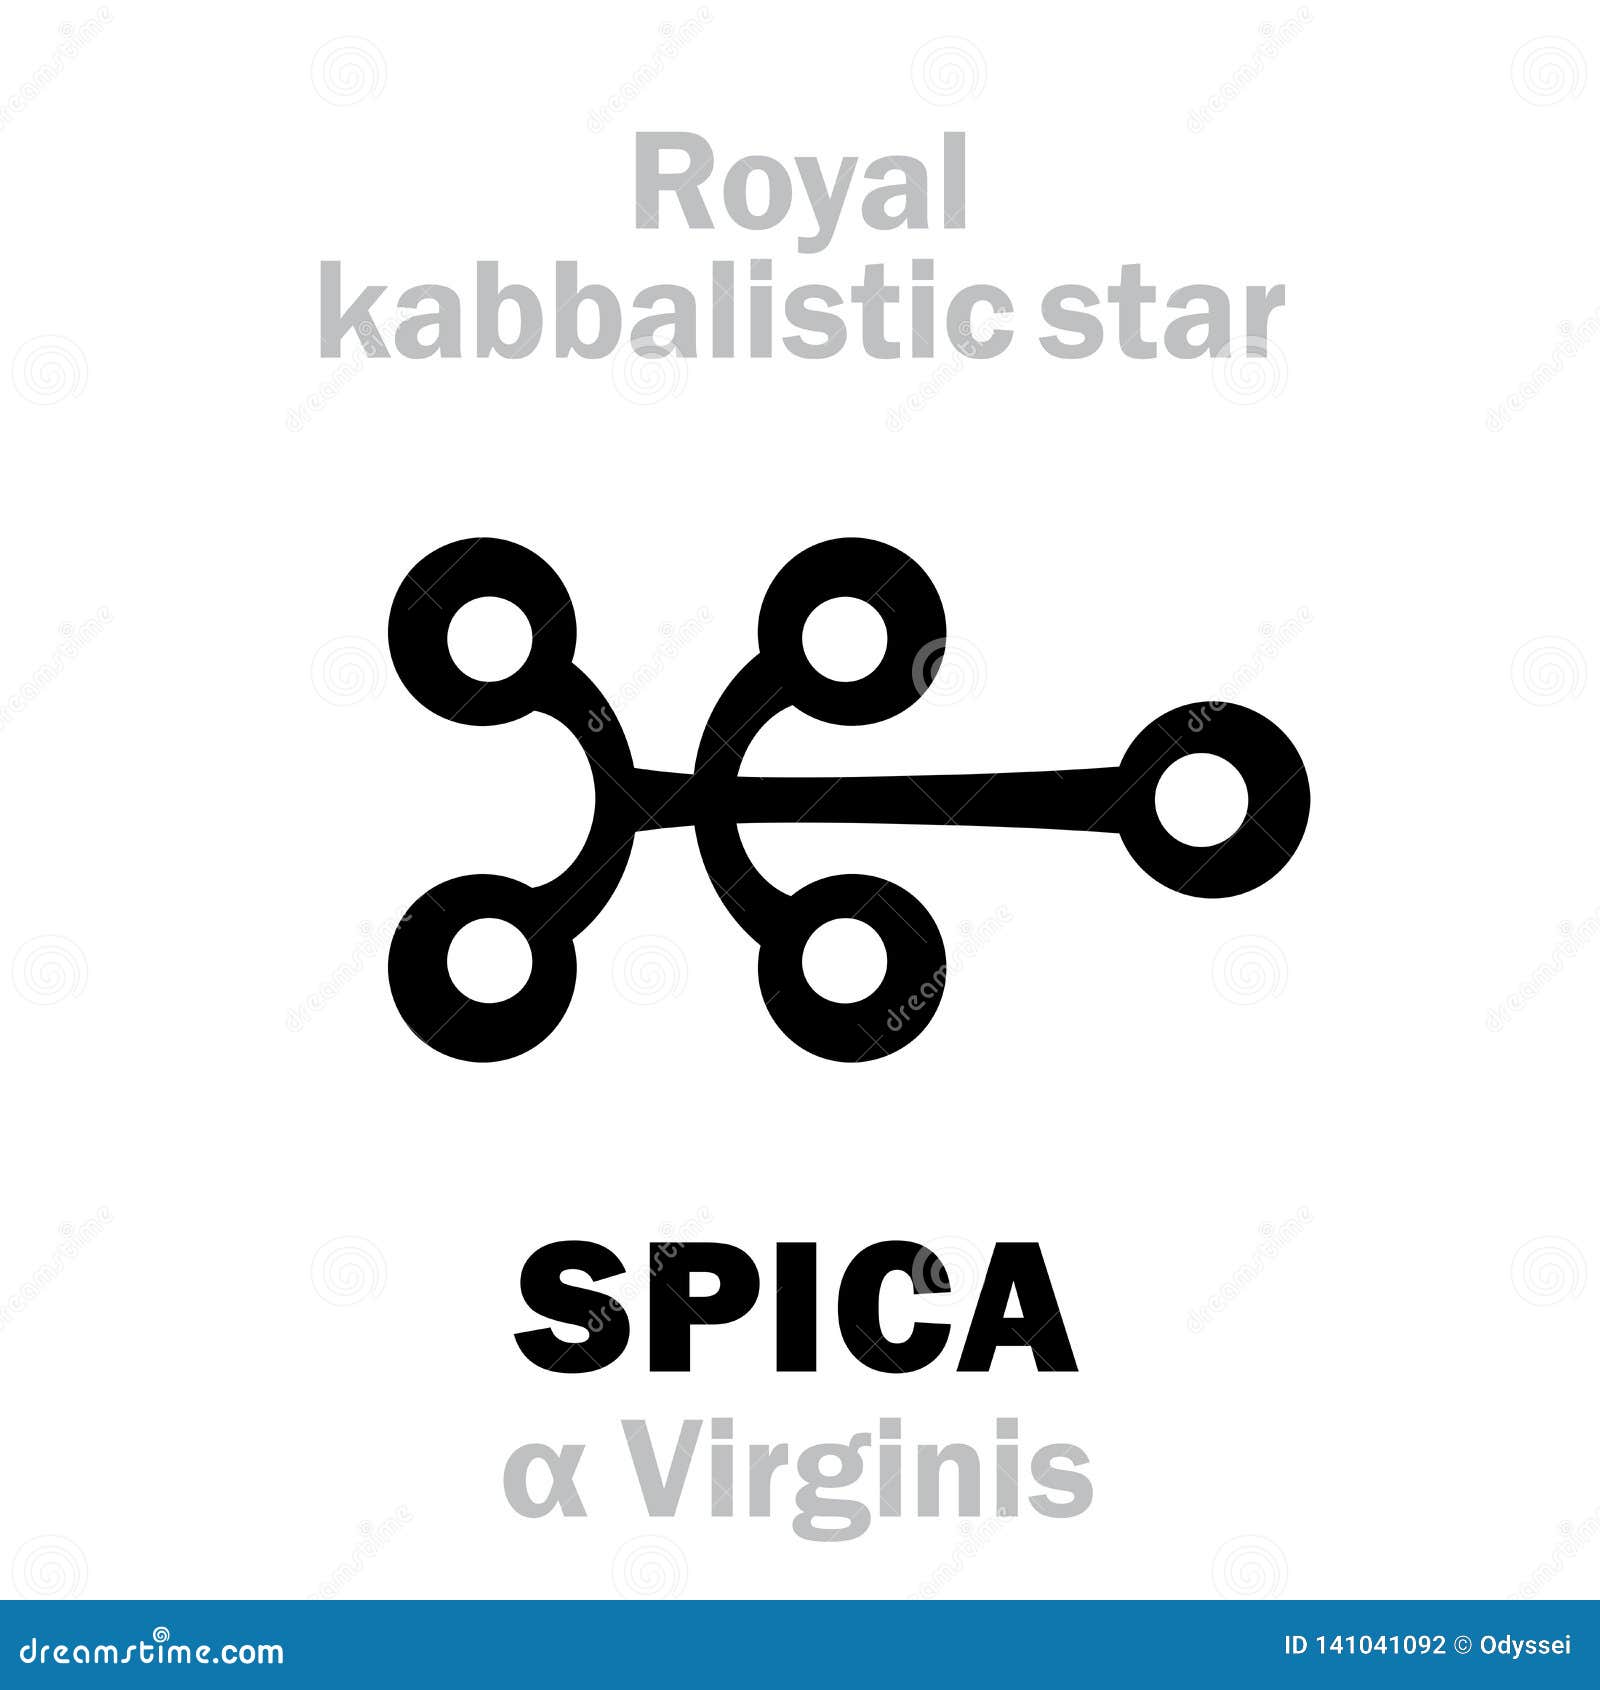 astrology: spica (the royal behenian kabbalistic star)